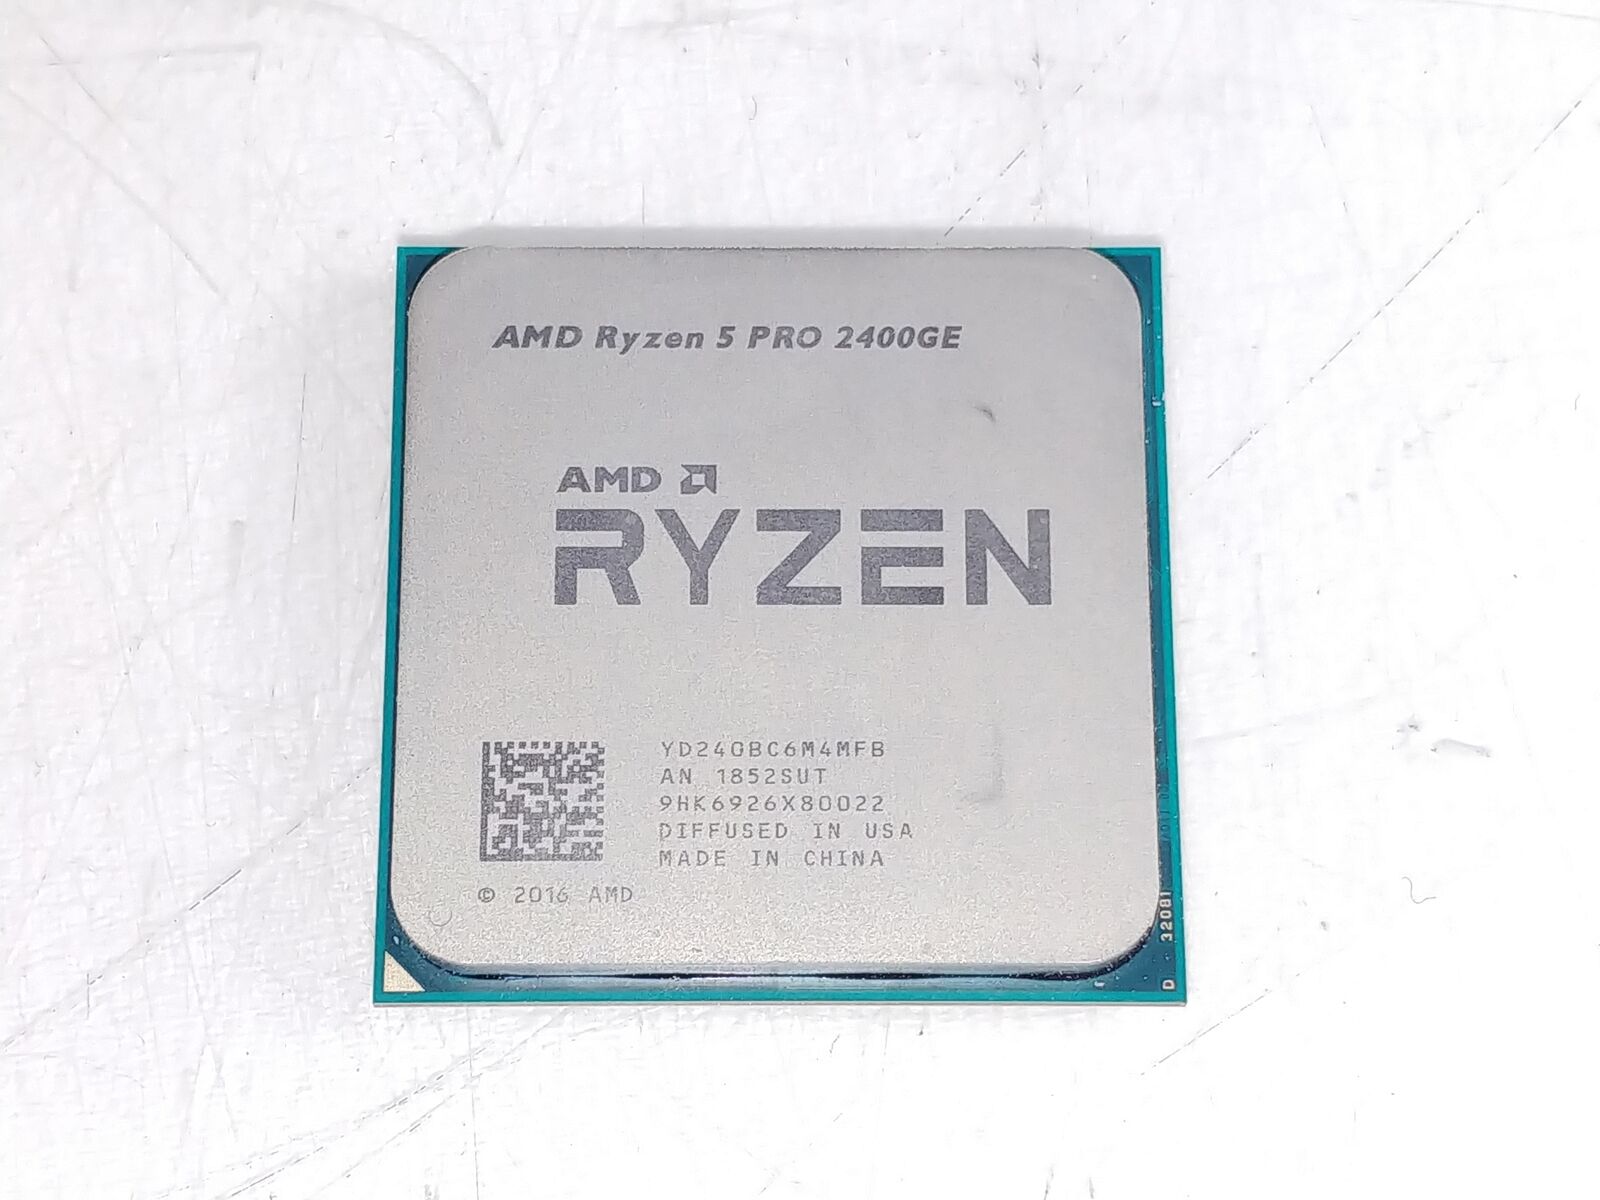 AMD YD240BC6M4MFB Ryzen 5 PRO 2400GE 3.2 GHz Socket AM4 Desktop CPU